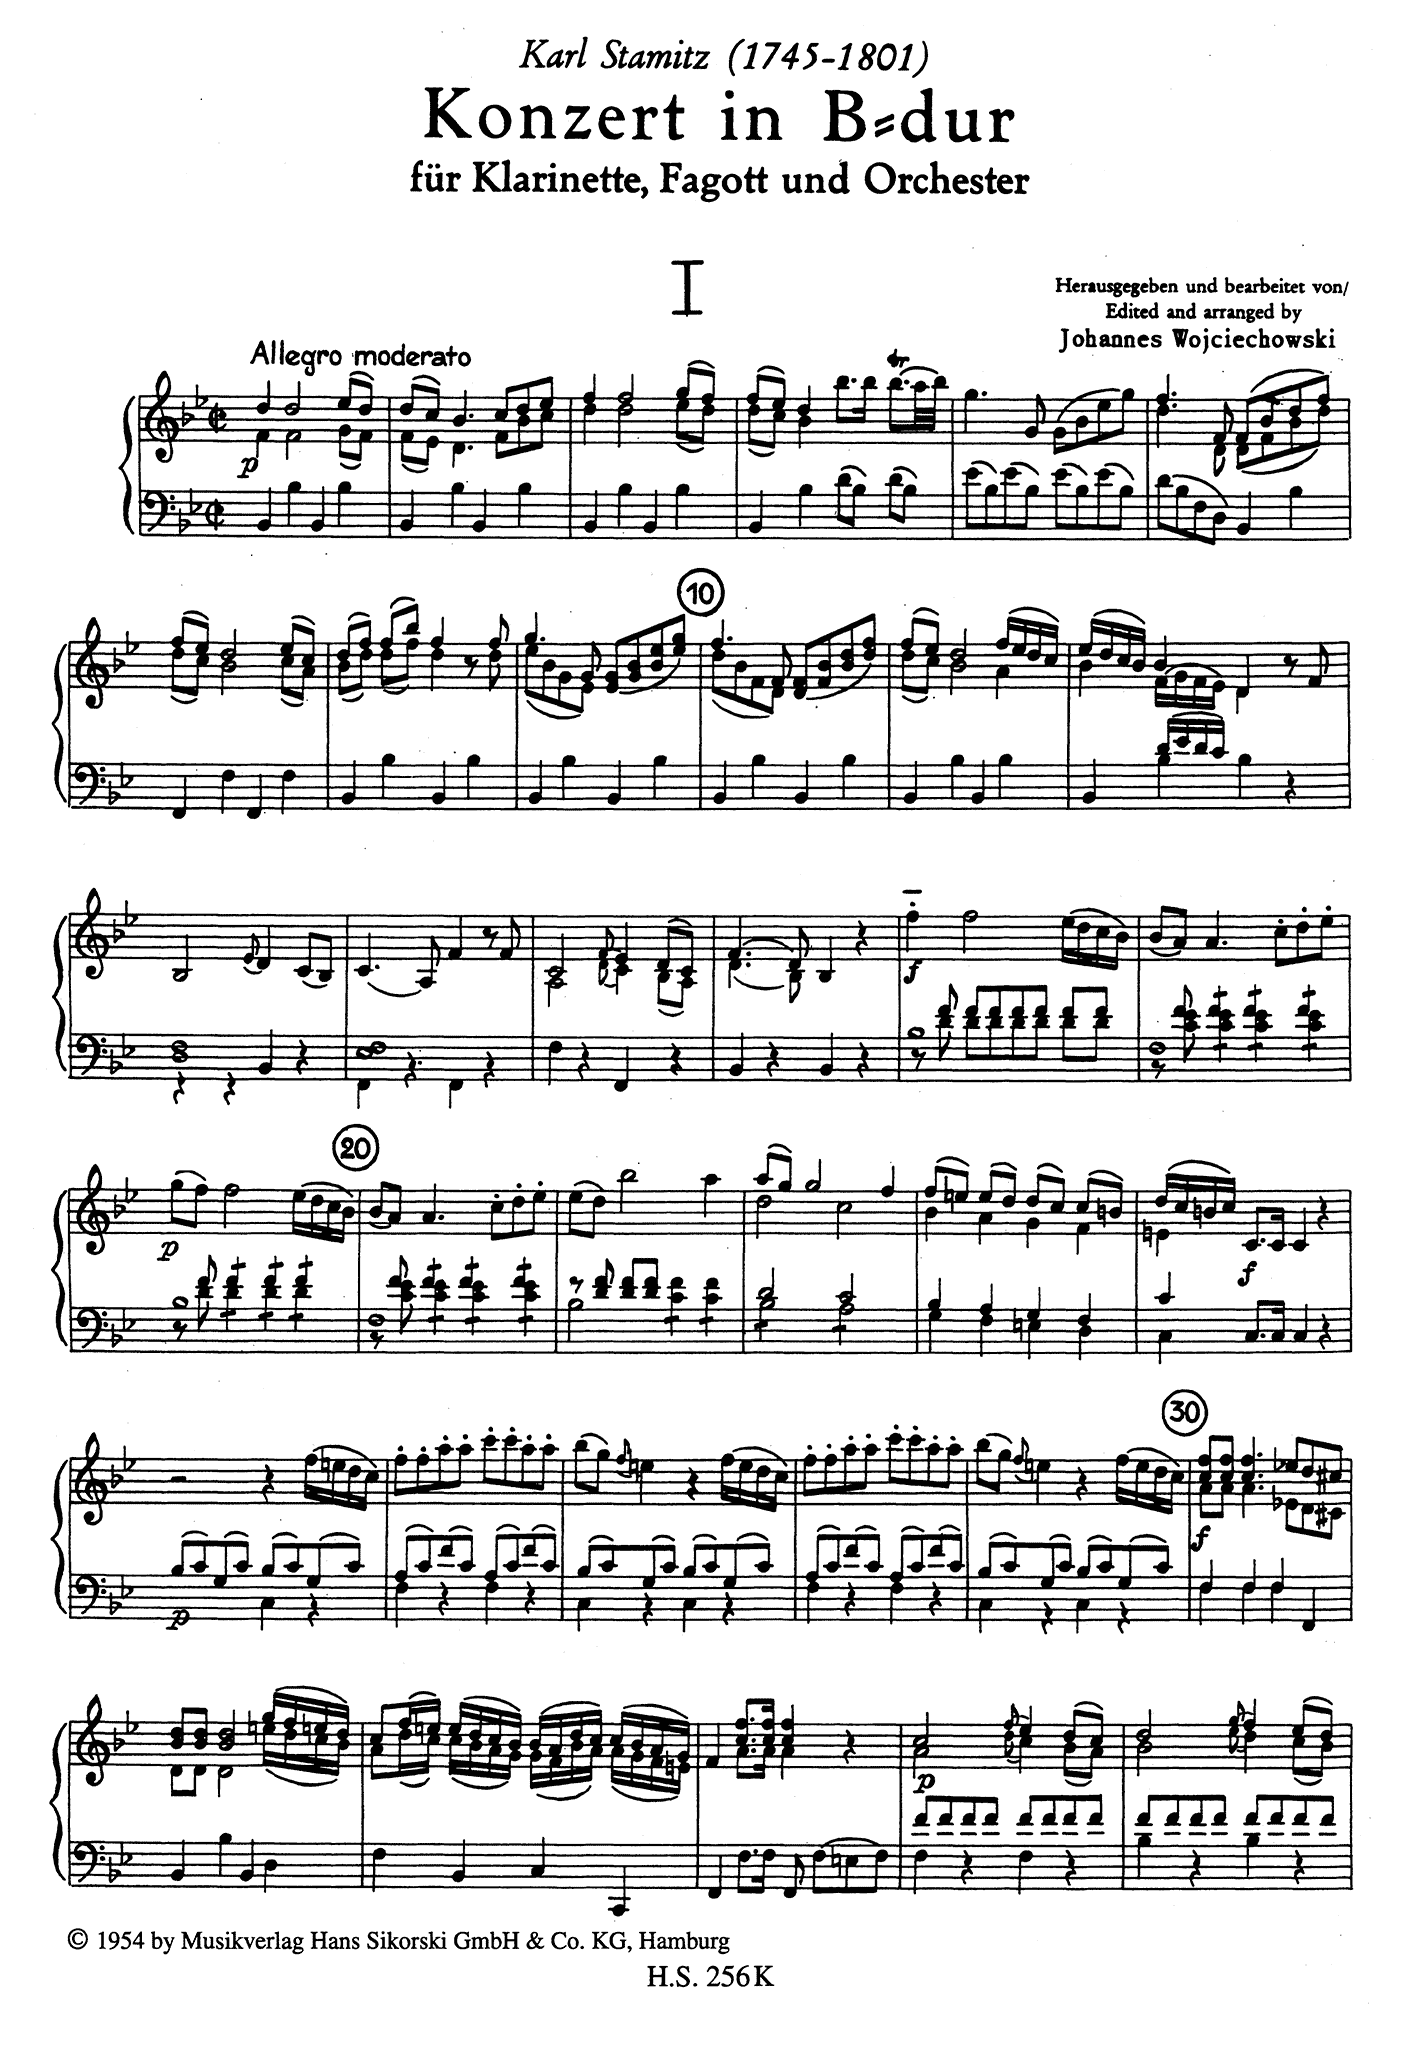 Carl Stamitz Concerto for Clarinet & Bassoon in B-flat Major - Movement 1